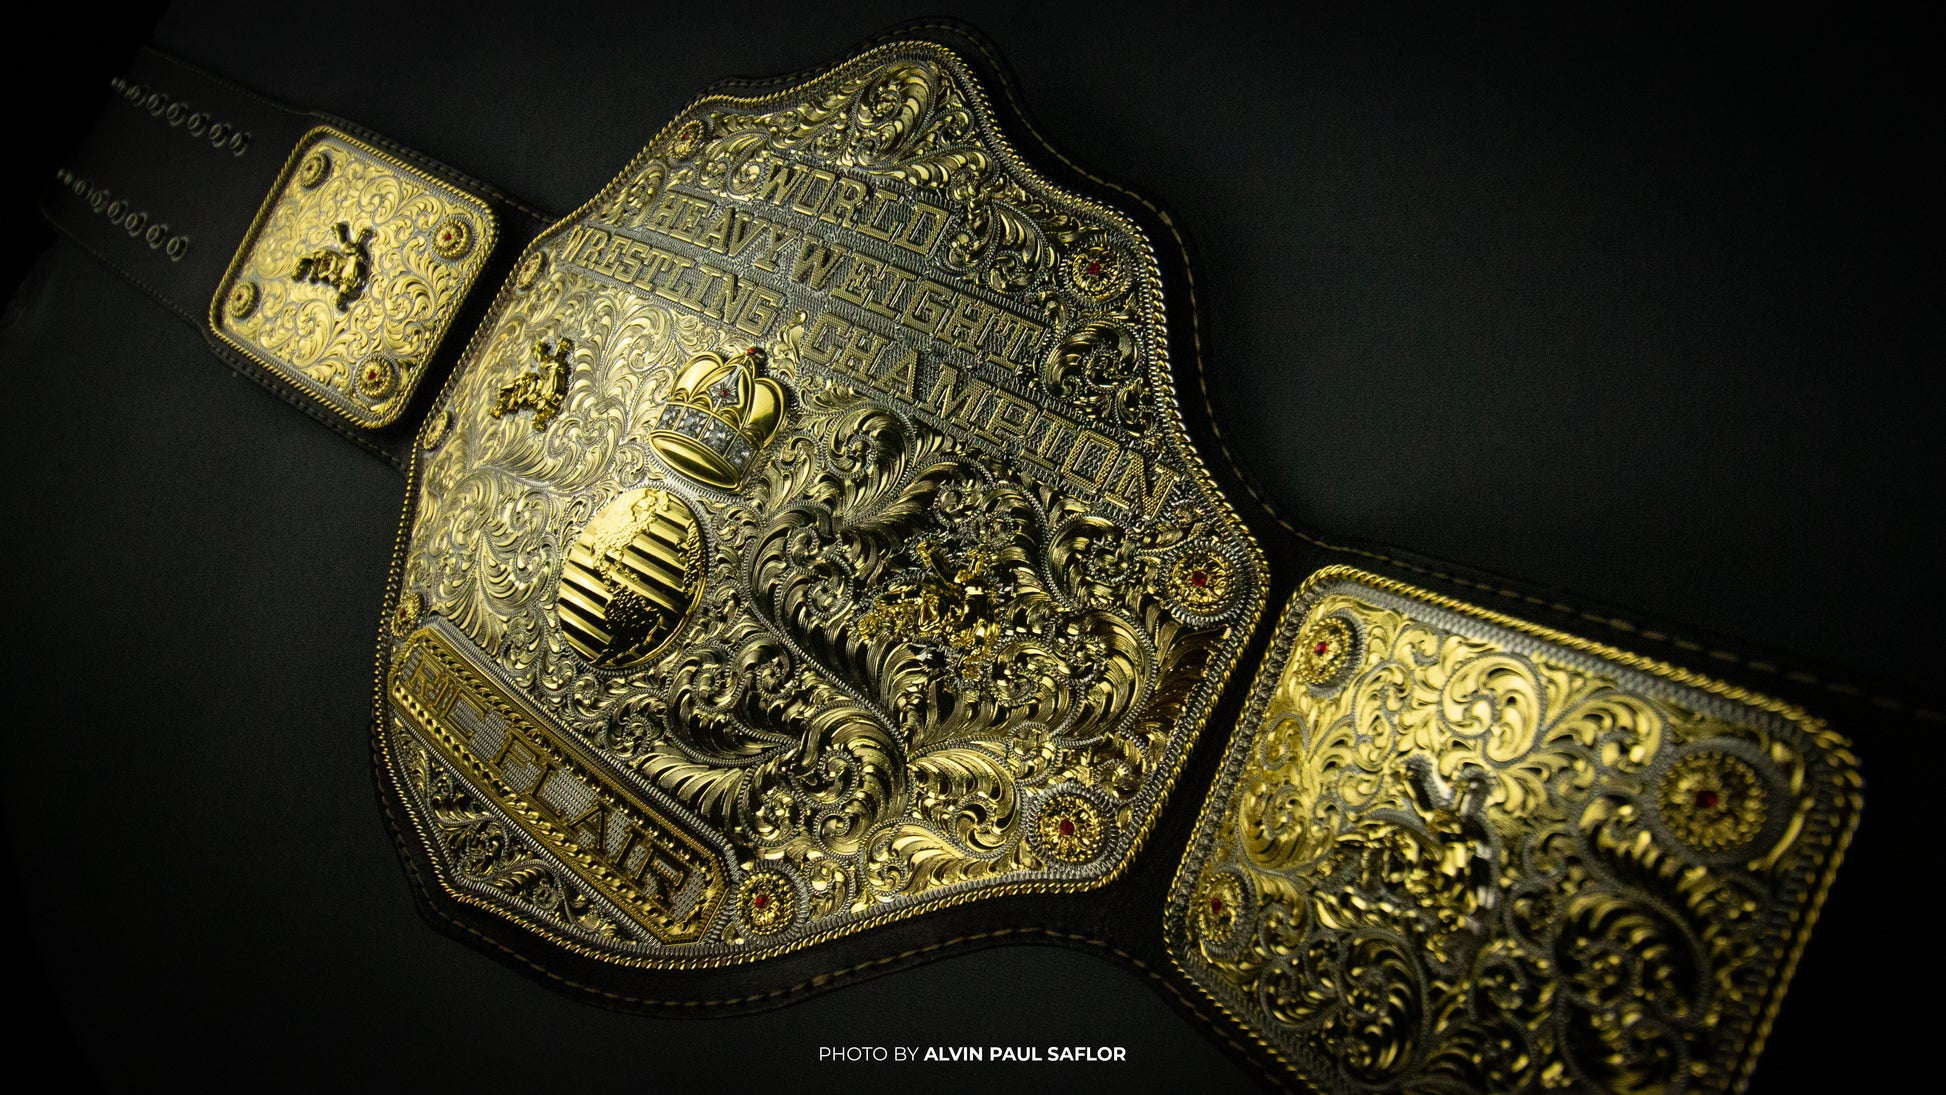 Set of 4 Nameplate Replica Belt Screws for WWE Championship Belts